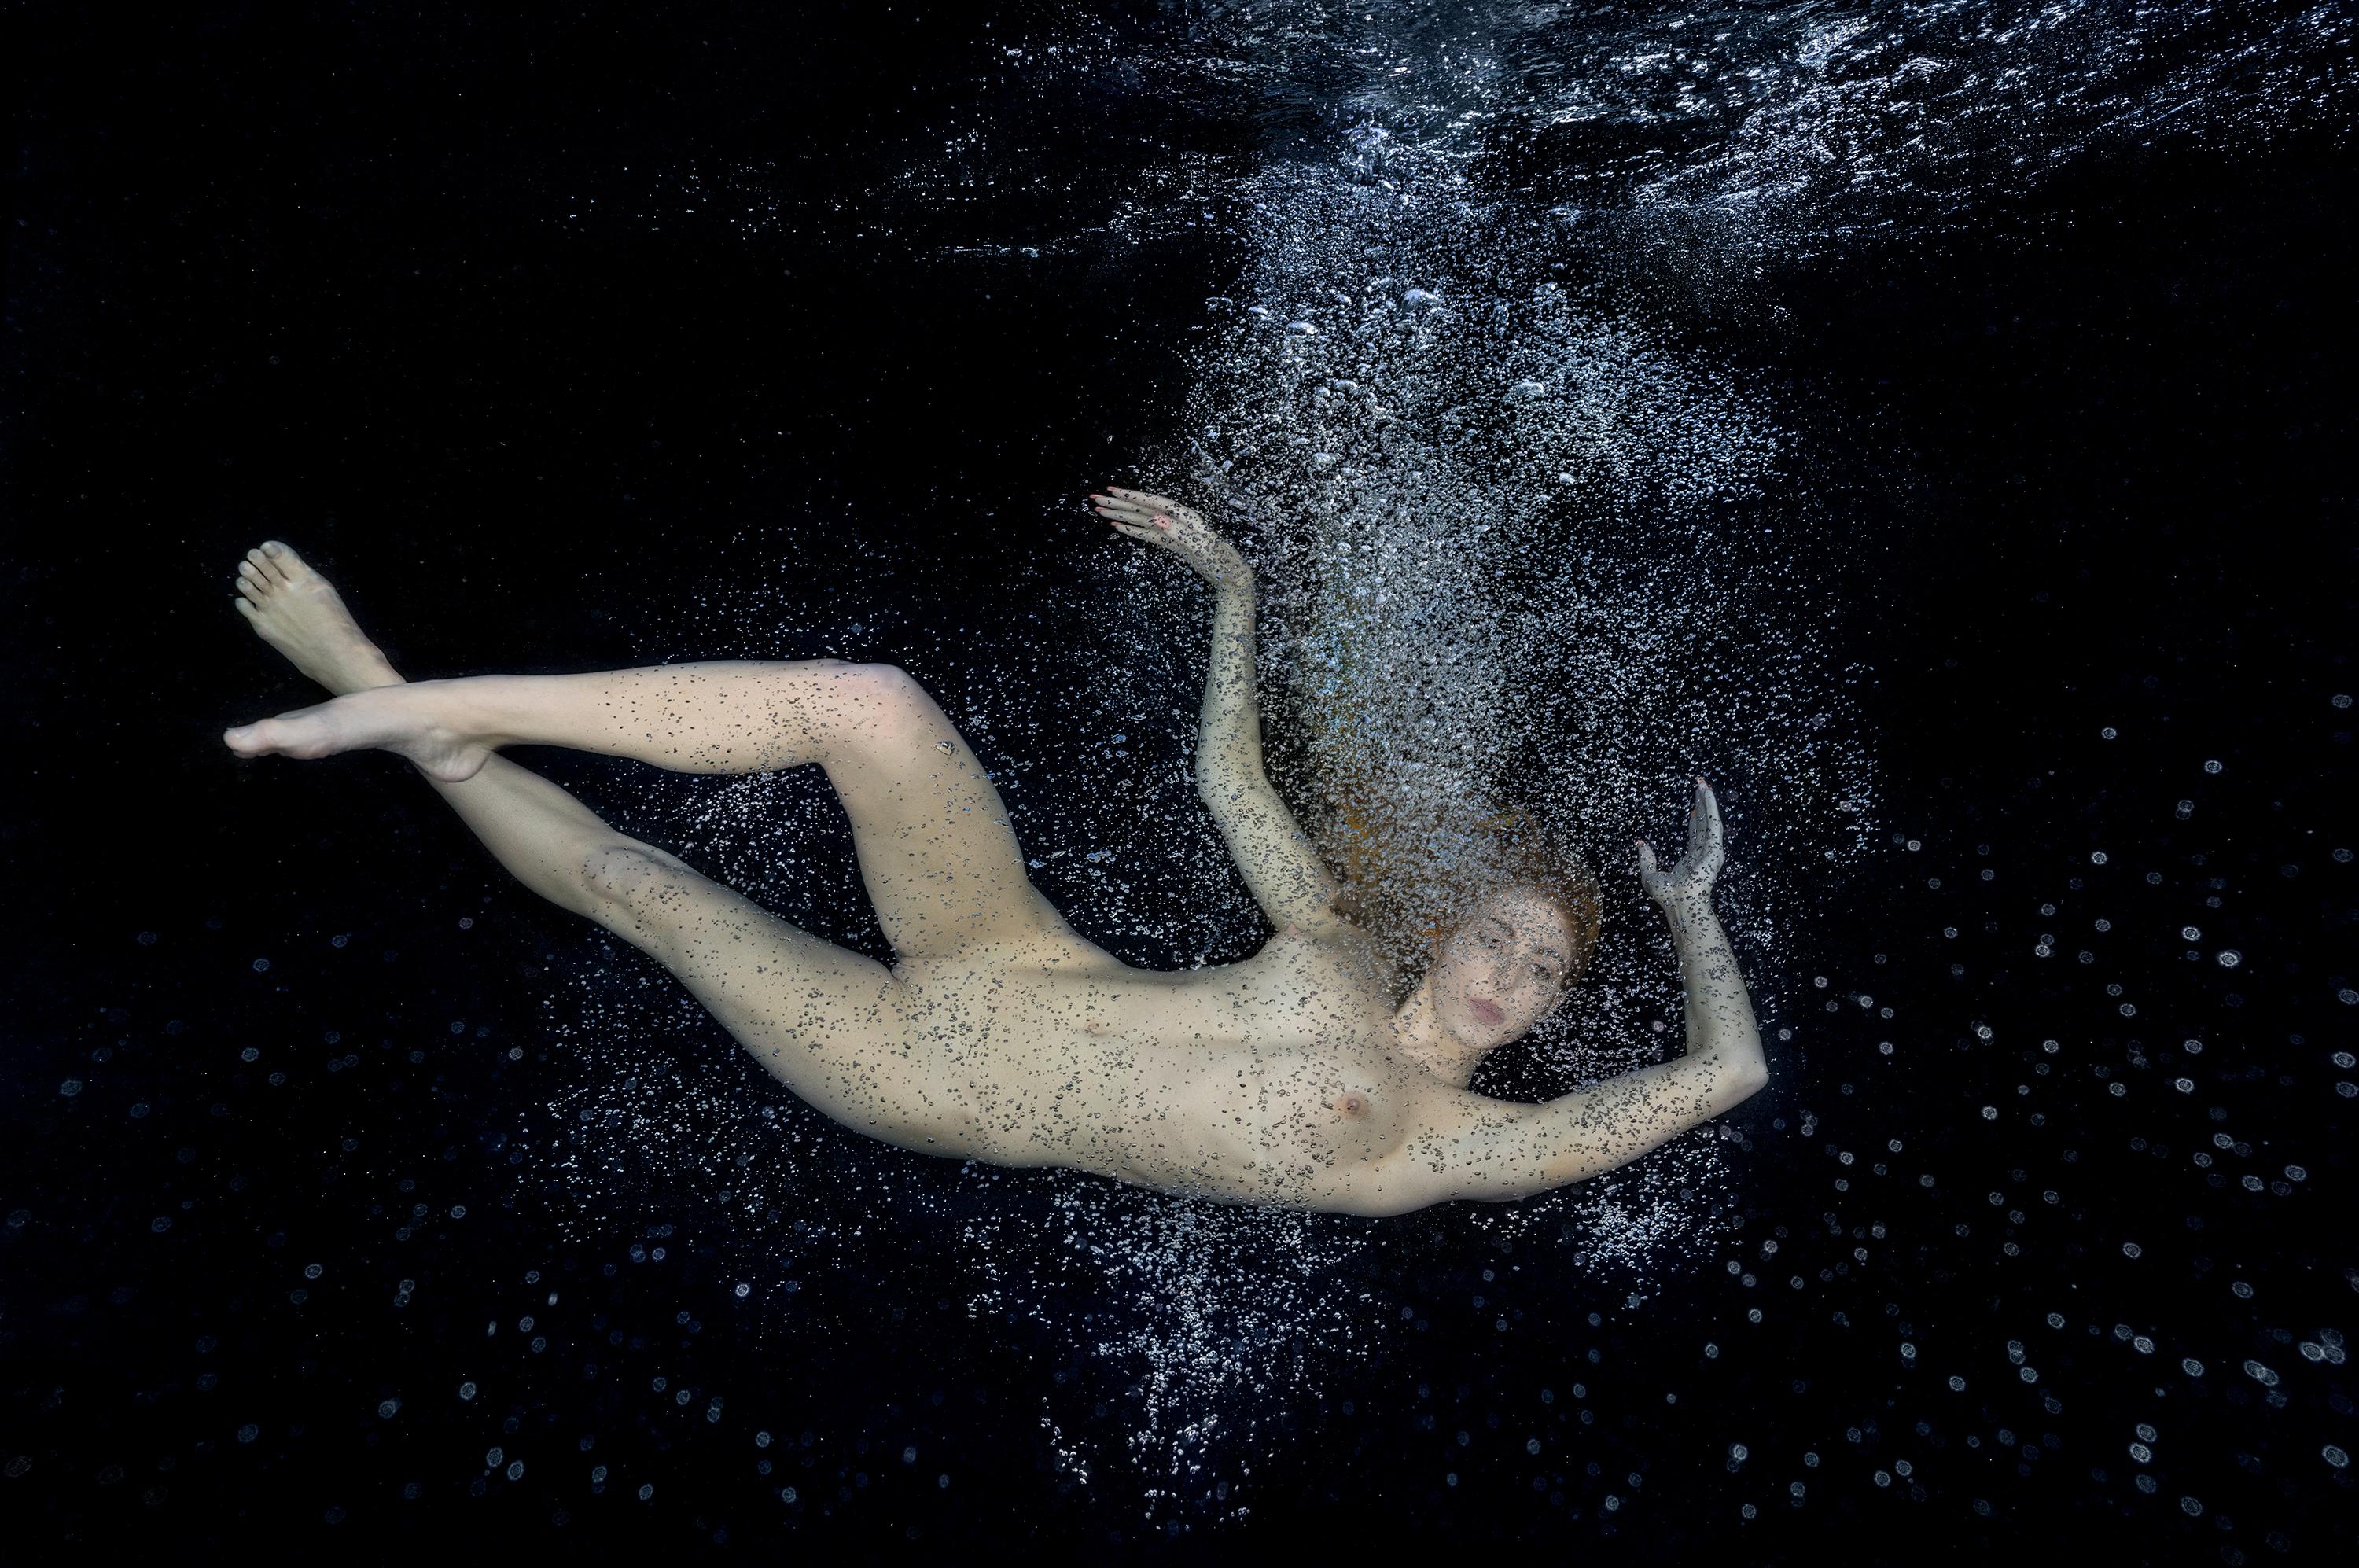 Alex Sher Figurative Photograph - Silver Rain - underwater nude photograph - archival pigment print 23x35"